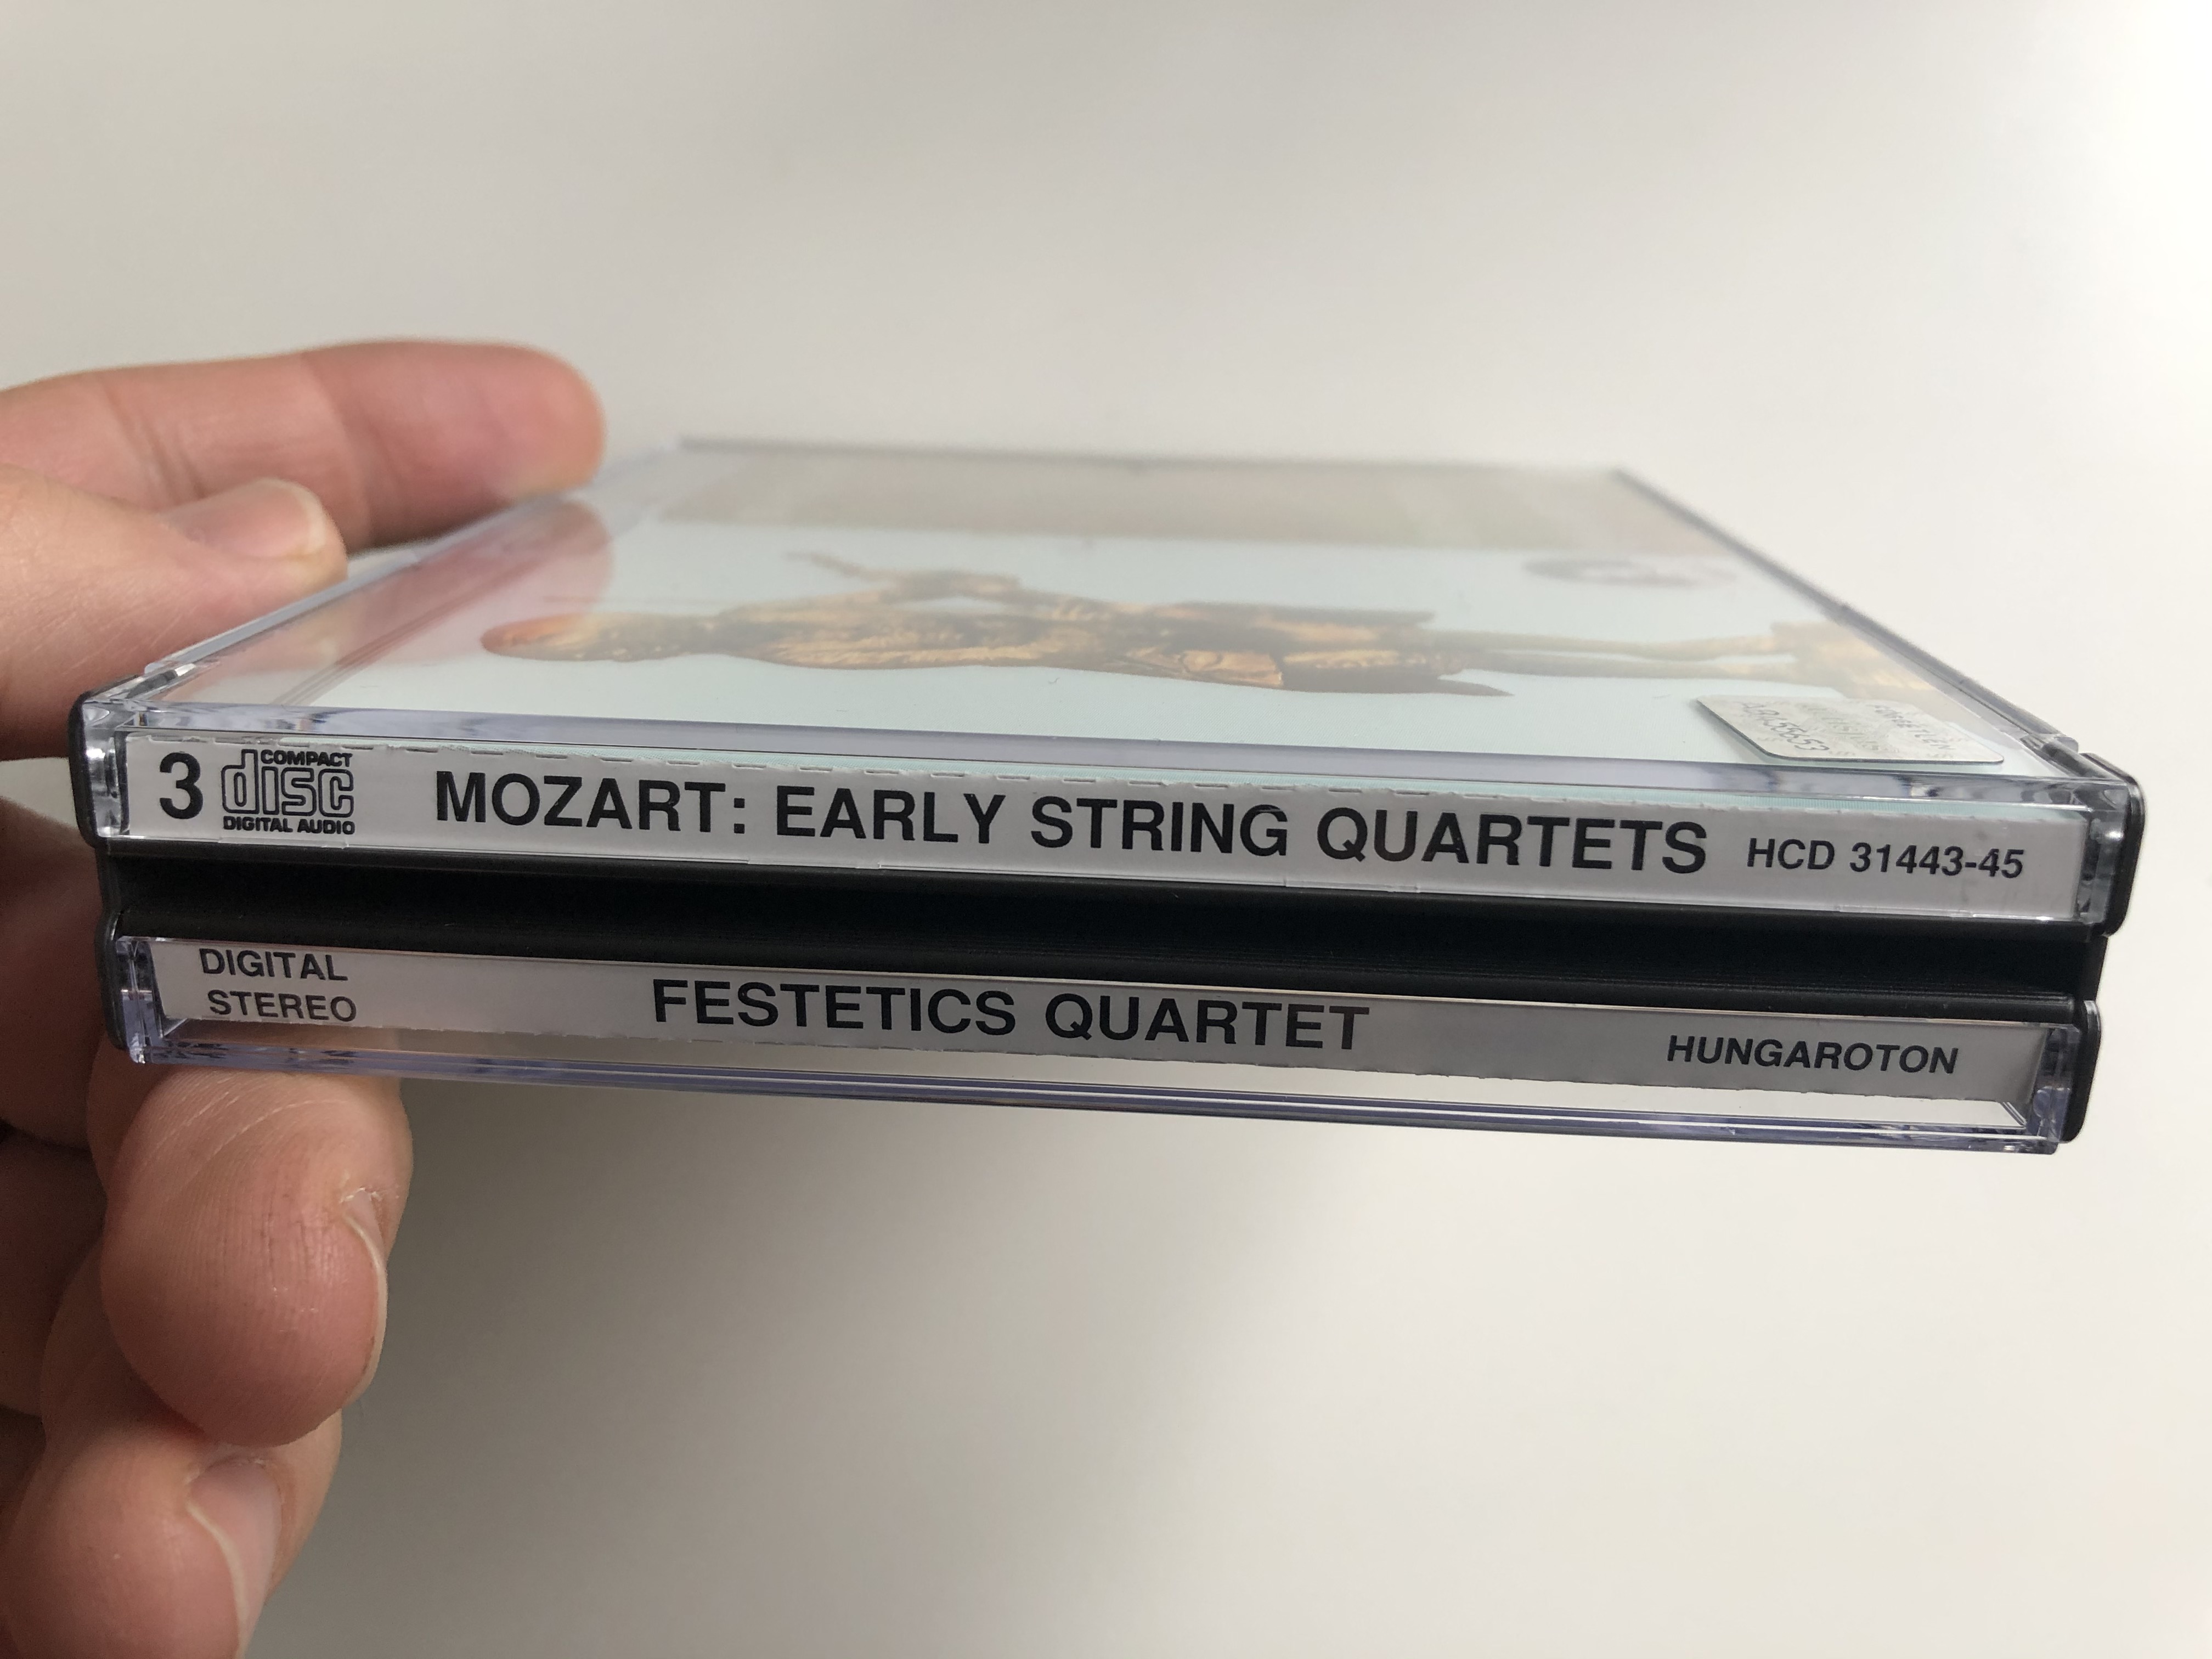 mozart-early-string-quartets-k.80-155-160-168-173-festetics-quartet-hungaroton-3x-audio-cd-1995-stereo-hcd-31443-45-13-.jpg